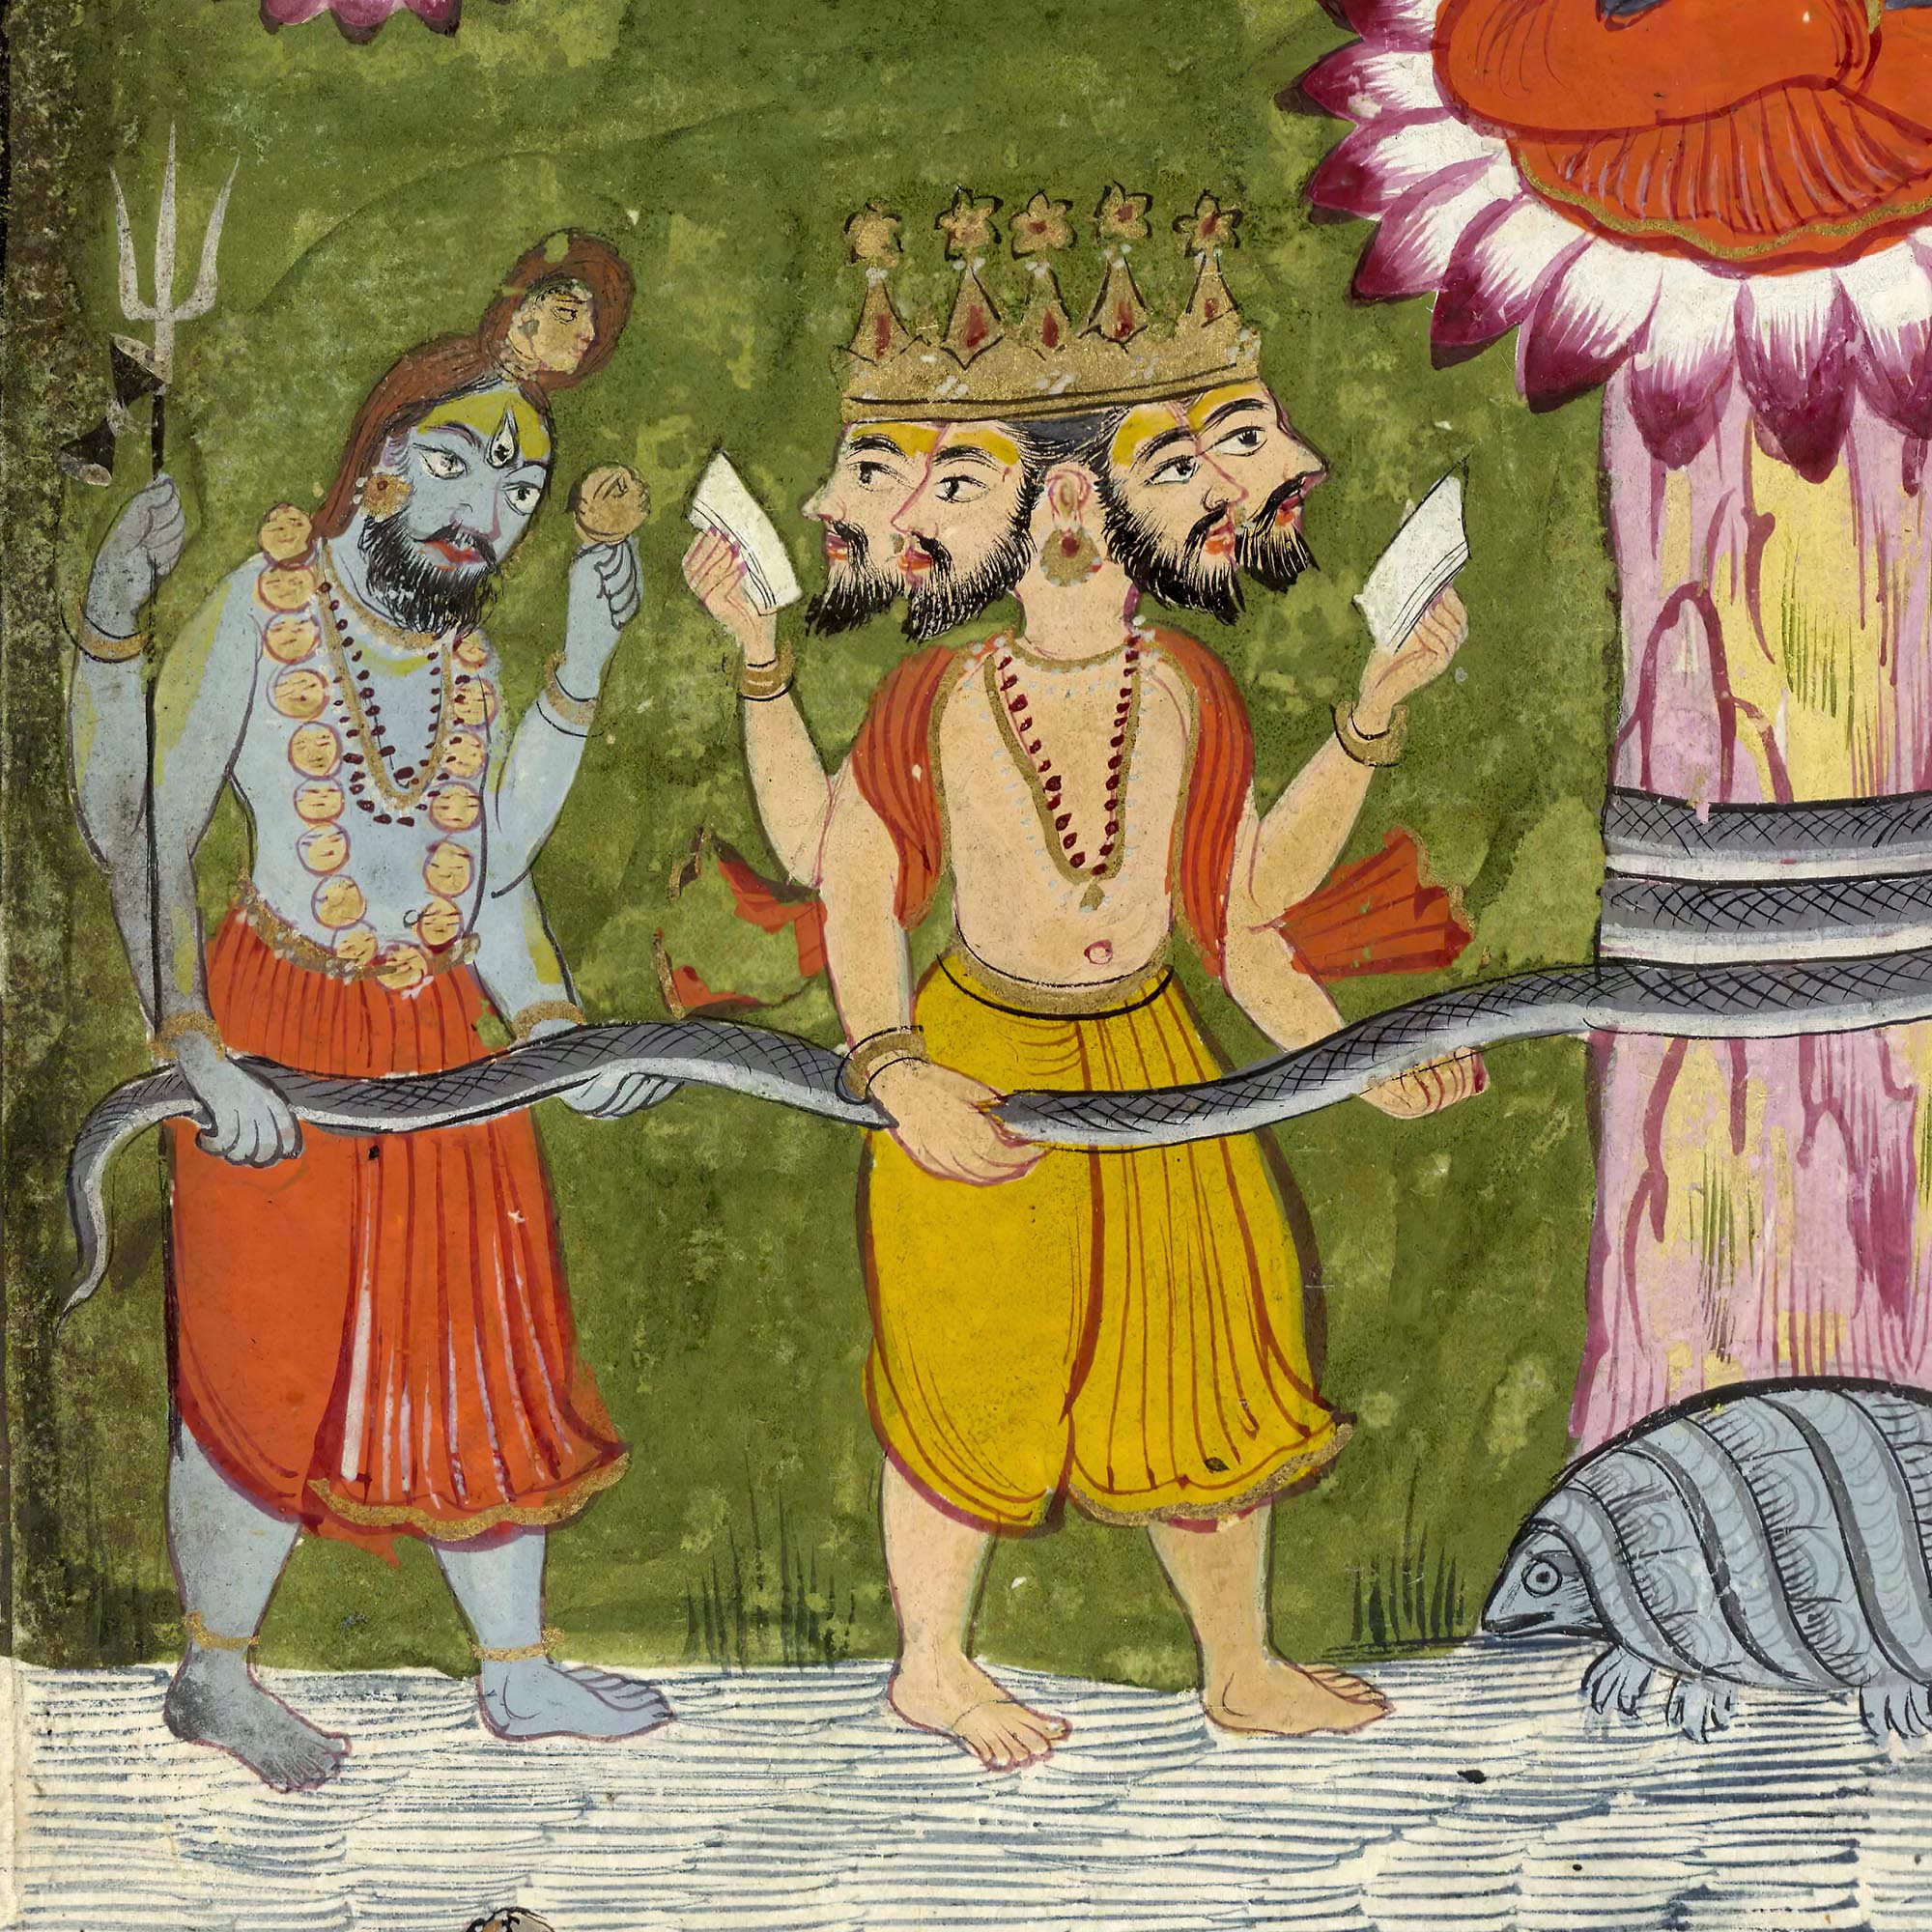 Vishnu Churning of the Ocean of Immortality | Devas and Asuras, Mount Mandara | Divine Hindu Mythology | Superb Framed Art Print - Sacred Surreal